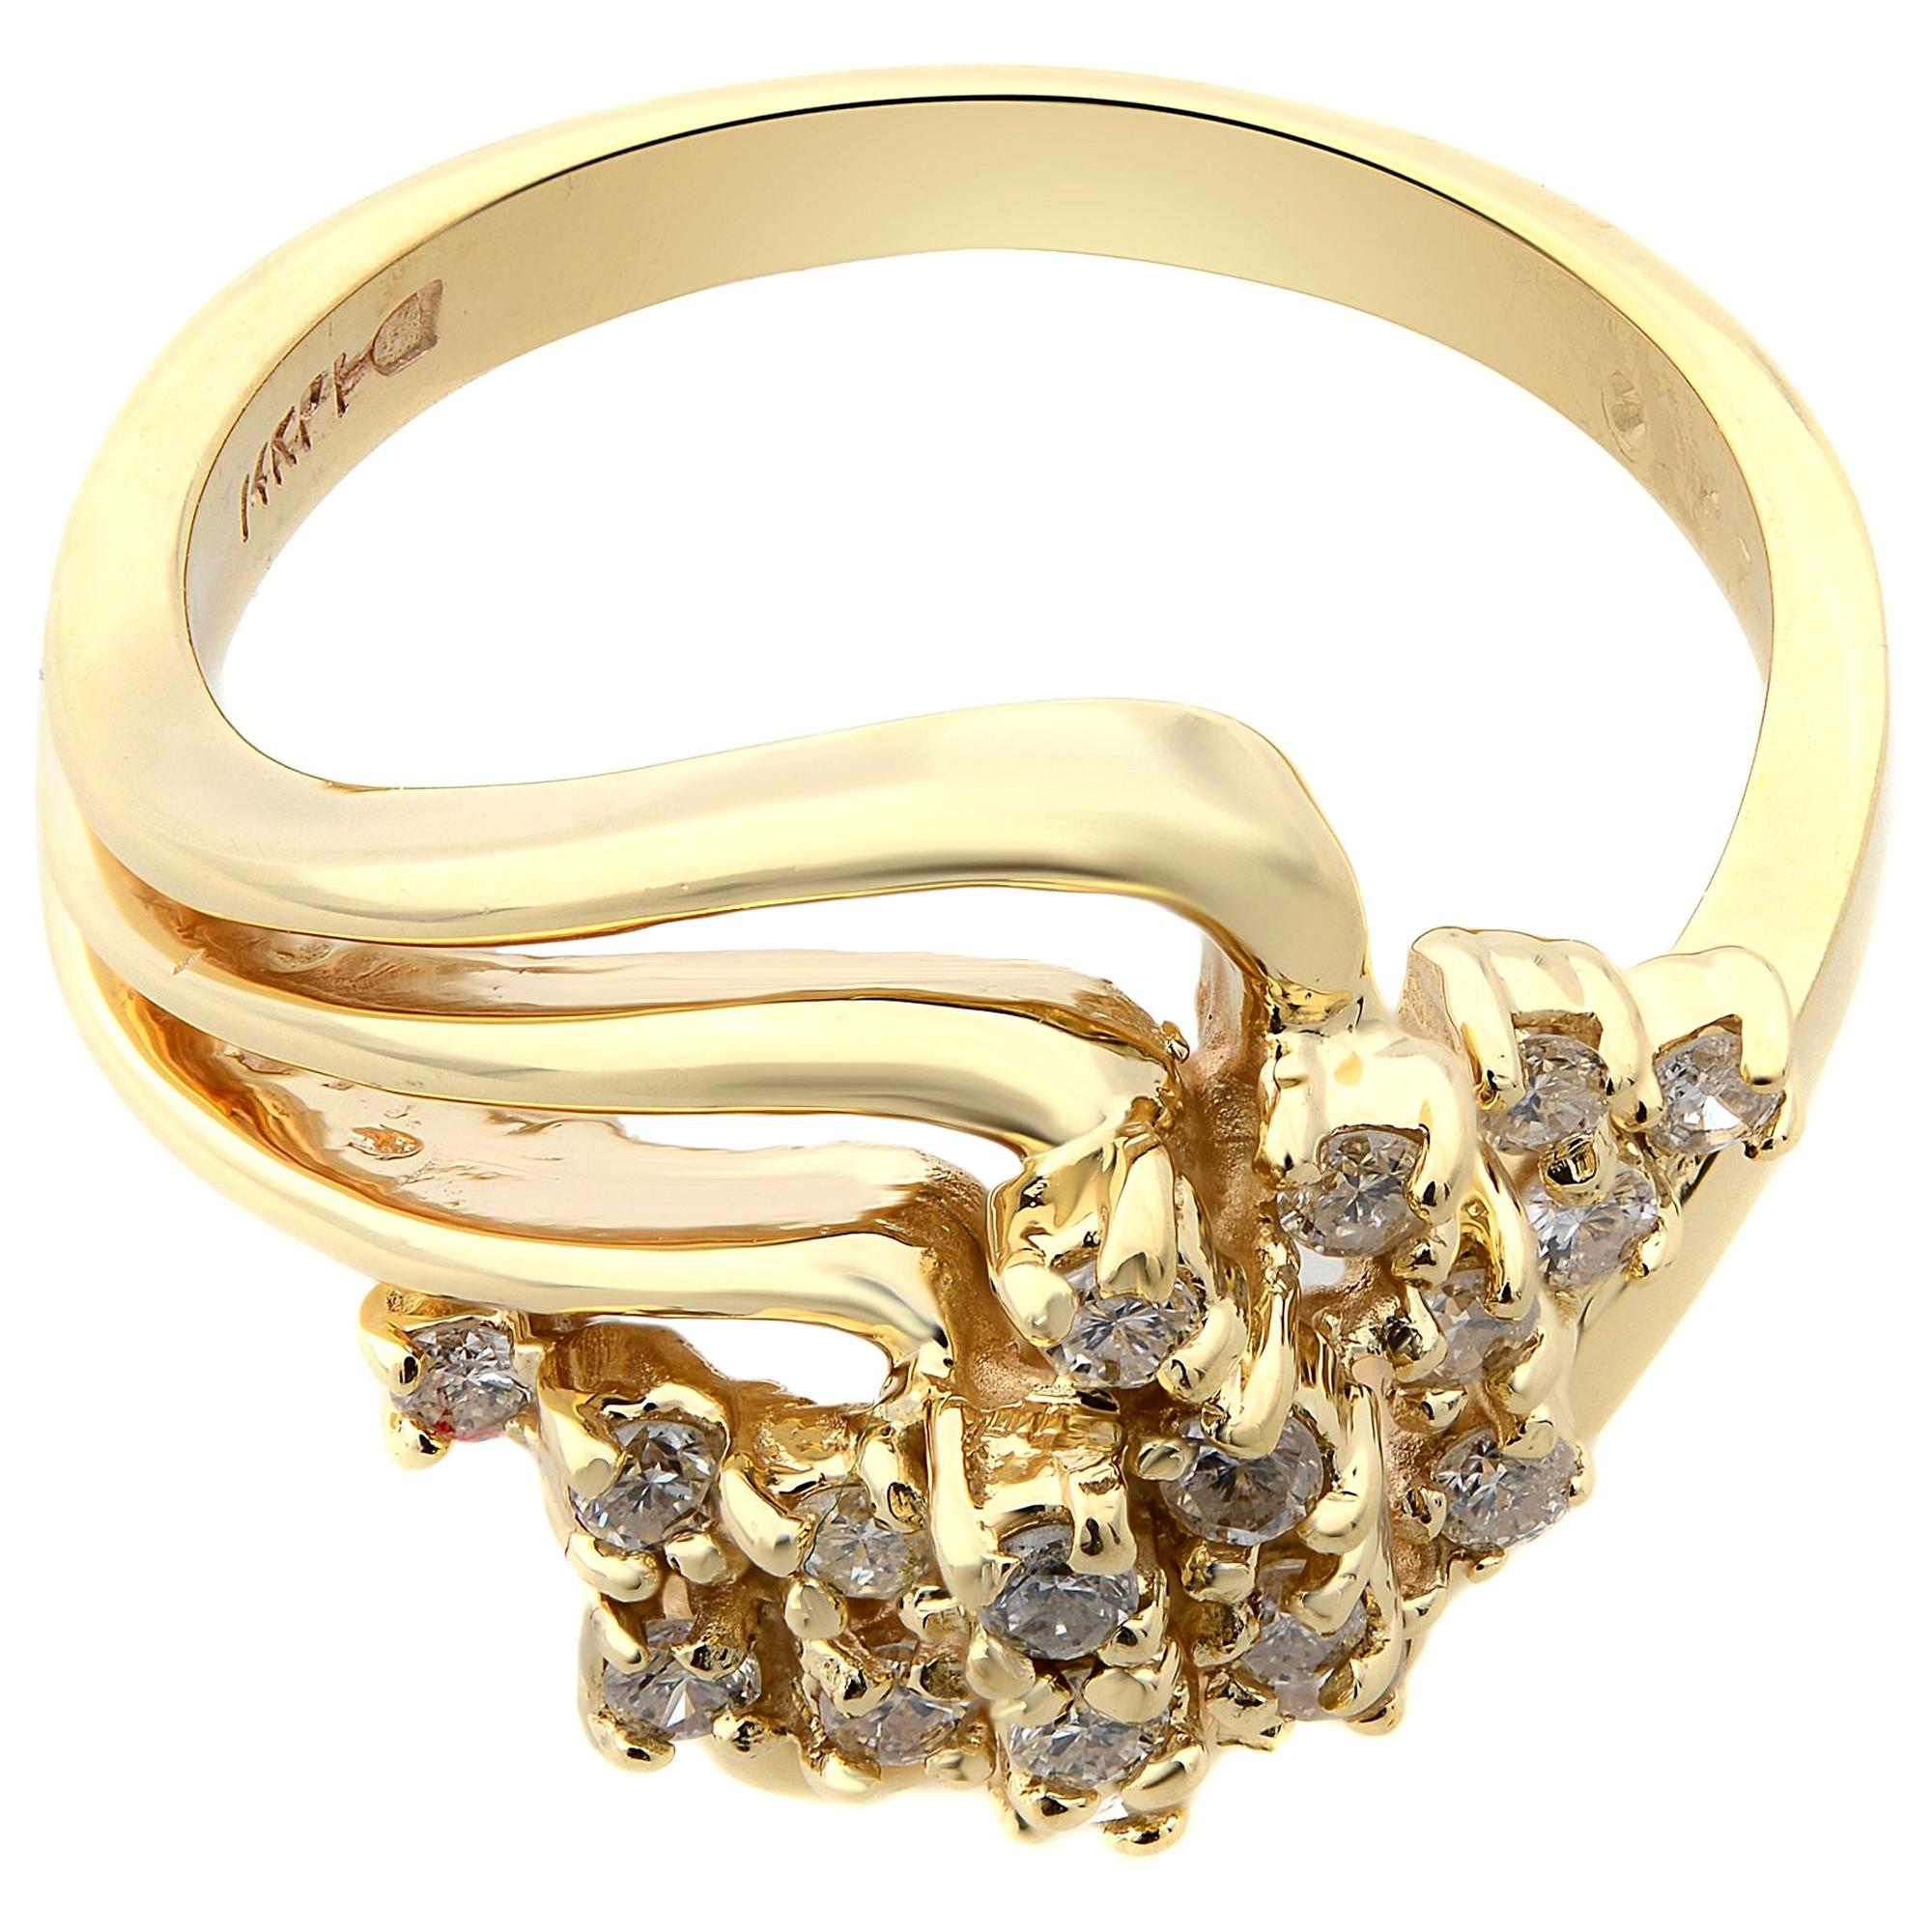 Rachel Koen 14 Karat Yellow Gold Diamond Cocktail Ring 0.25 Carat